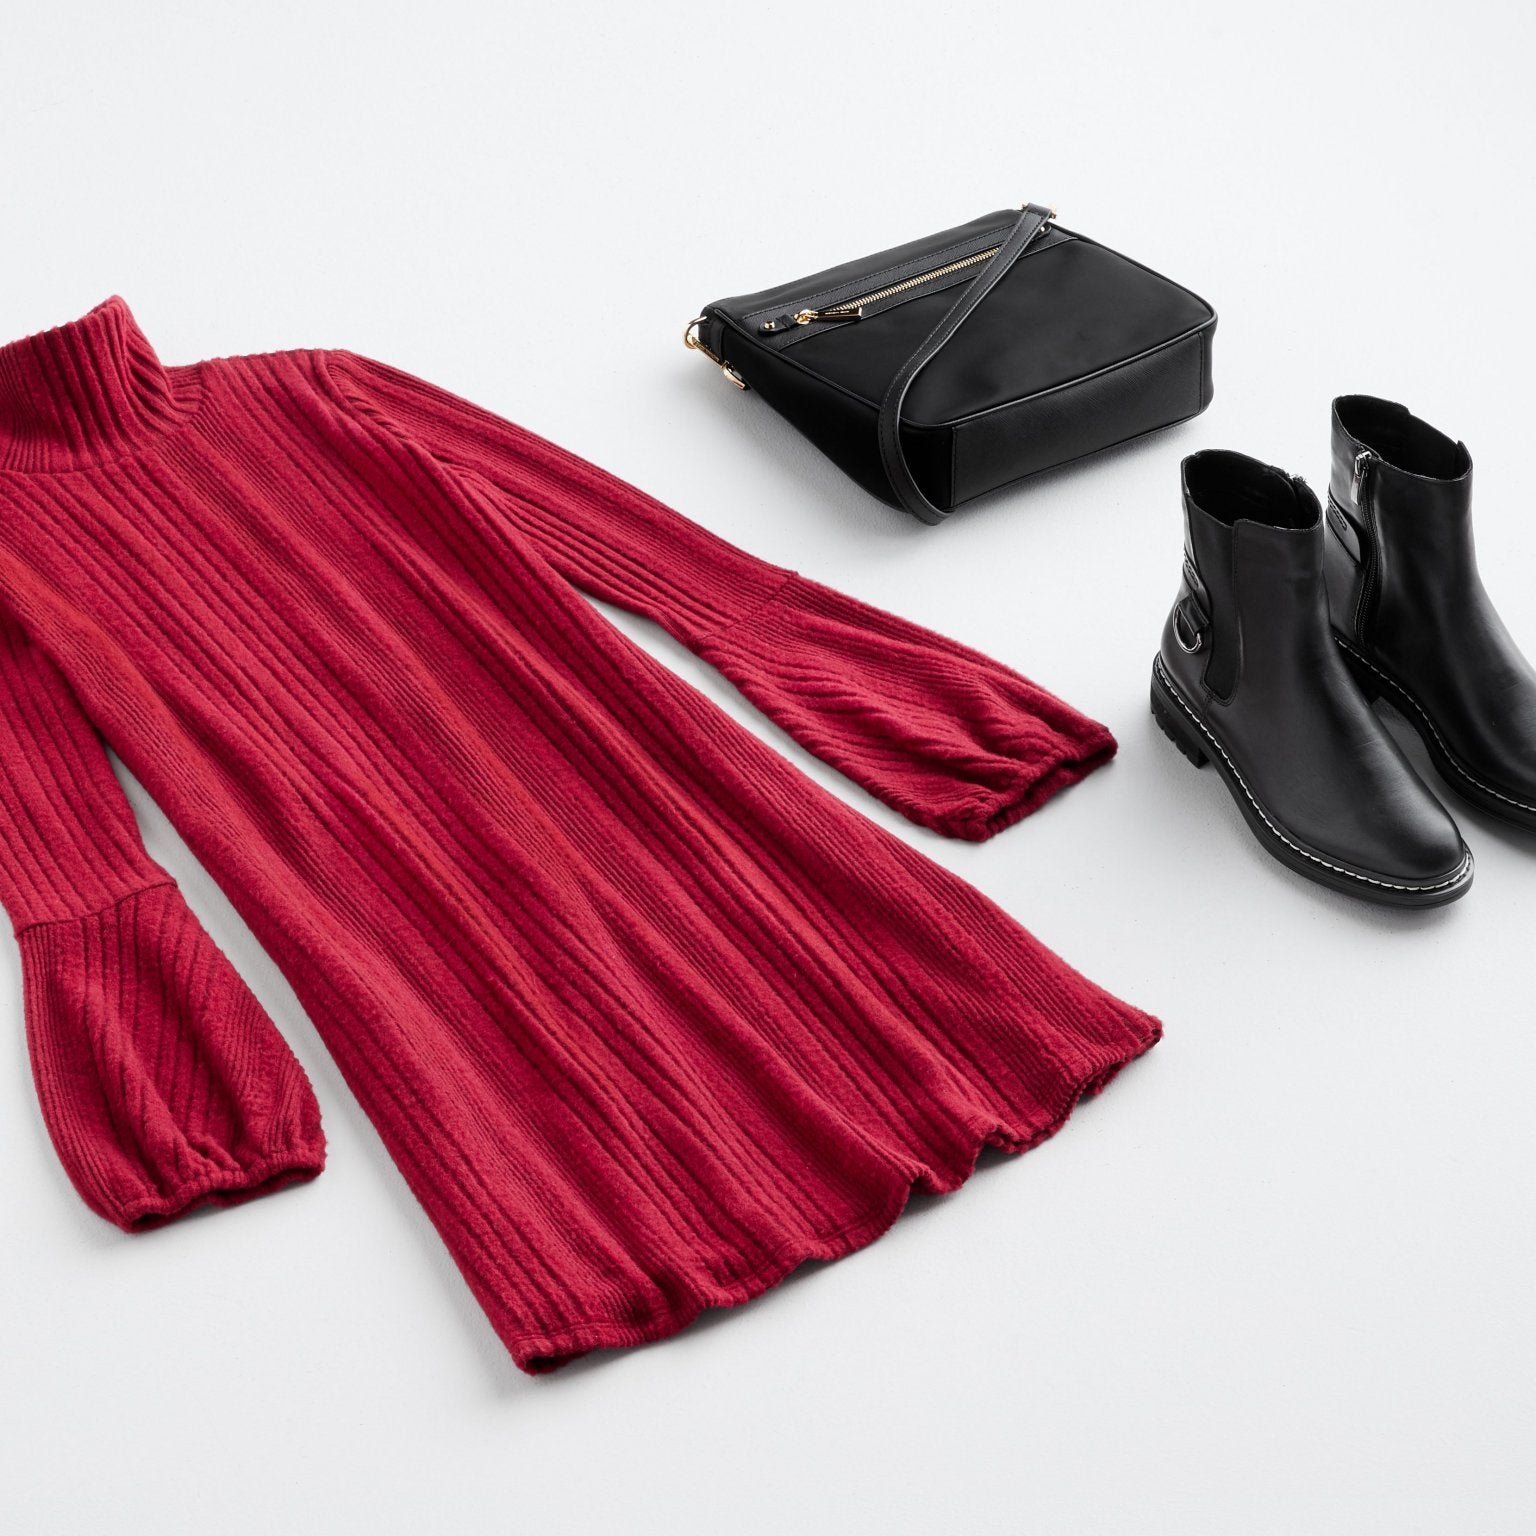 Jewel tone - Ruby Red - Dress Sweater flat lay, black boots, black bag